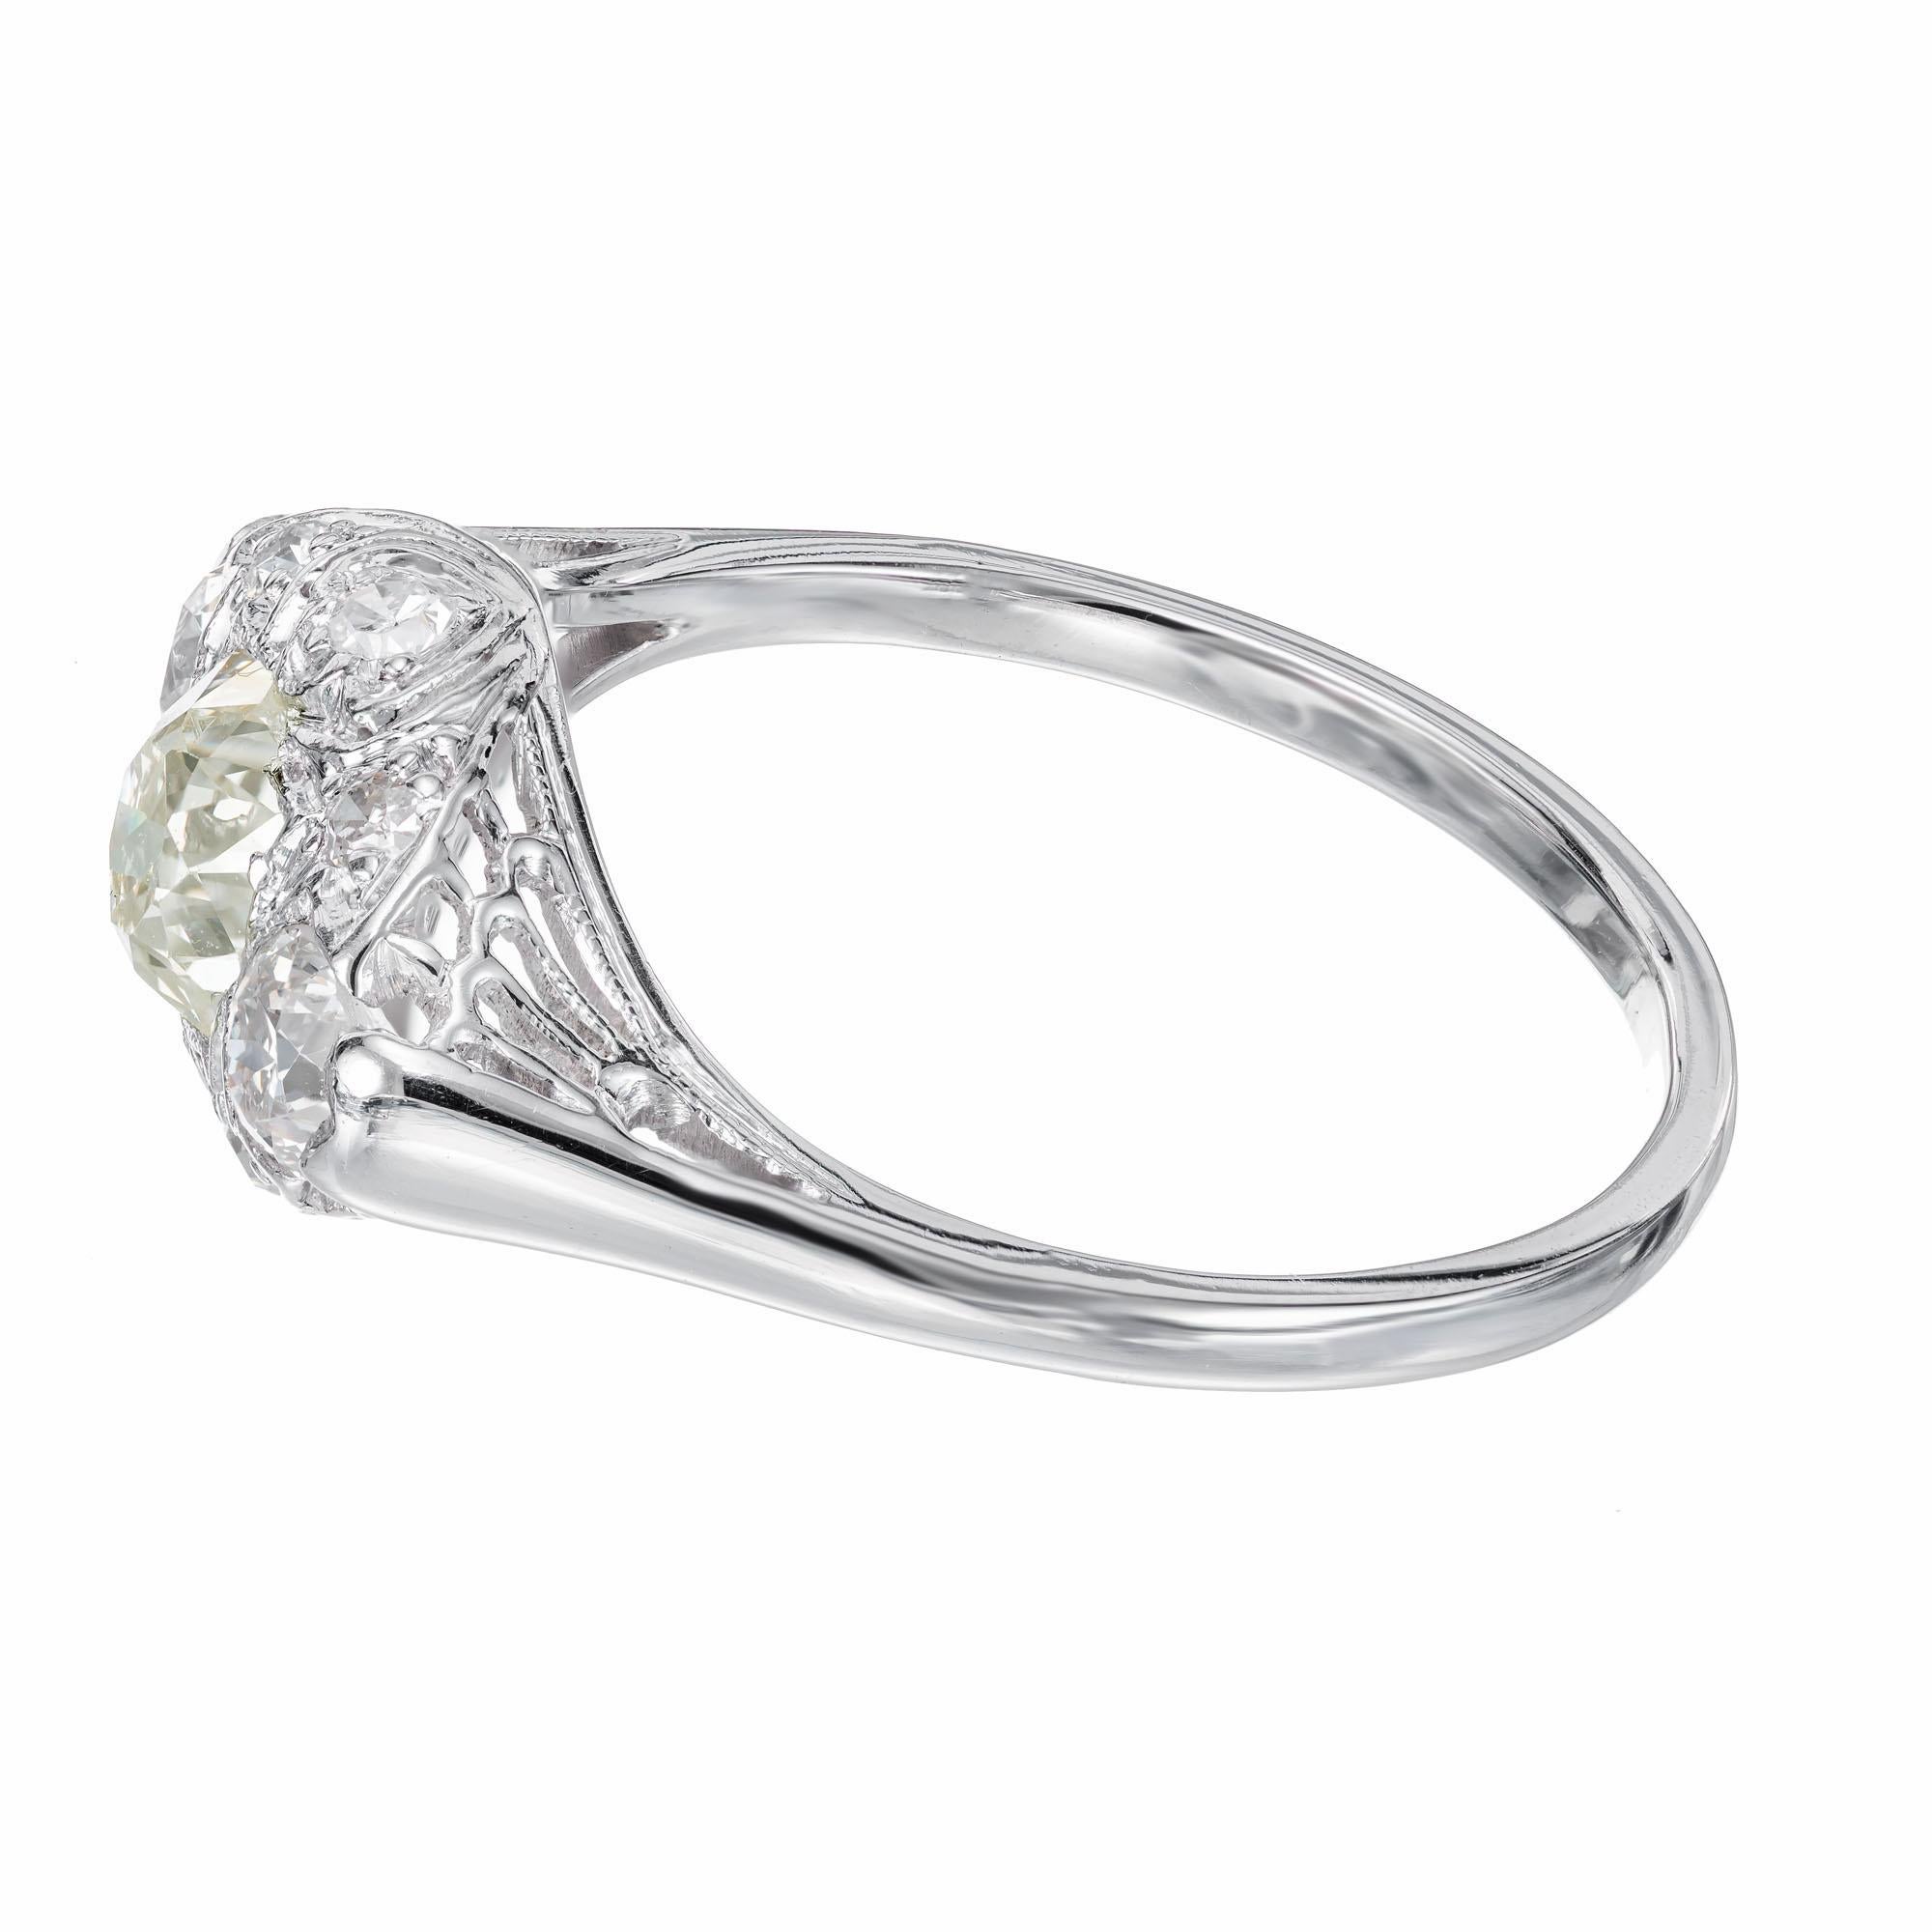 Old Mine Cut 1.07 Carat Diamond Platinum Engagement Ring For Sale